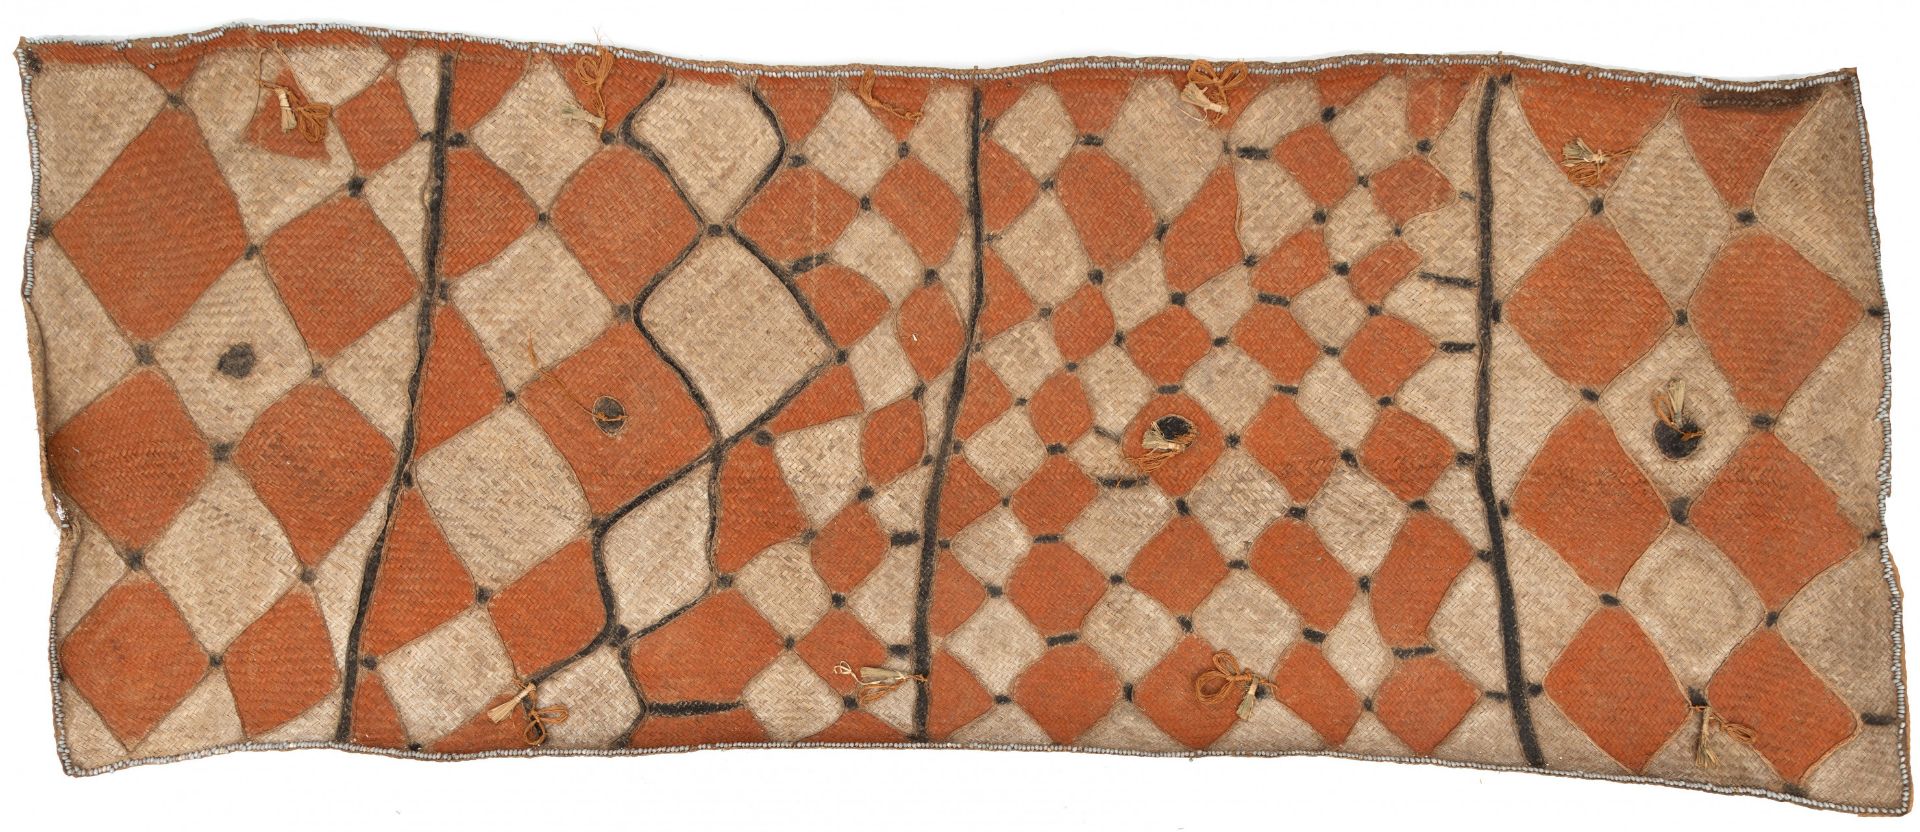 Papua, Asmat, a woven plant fiber mat - Image 2 of 2